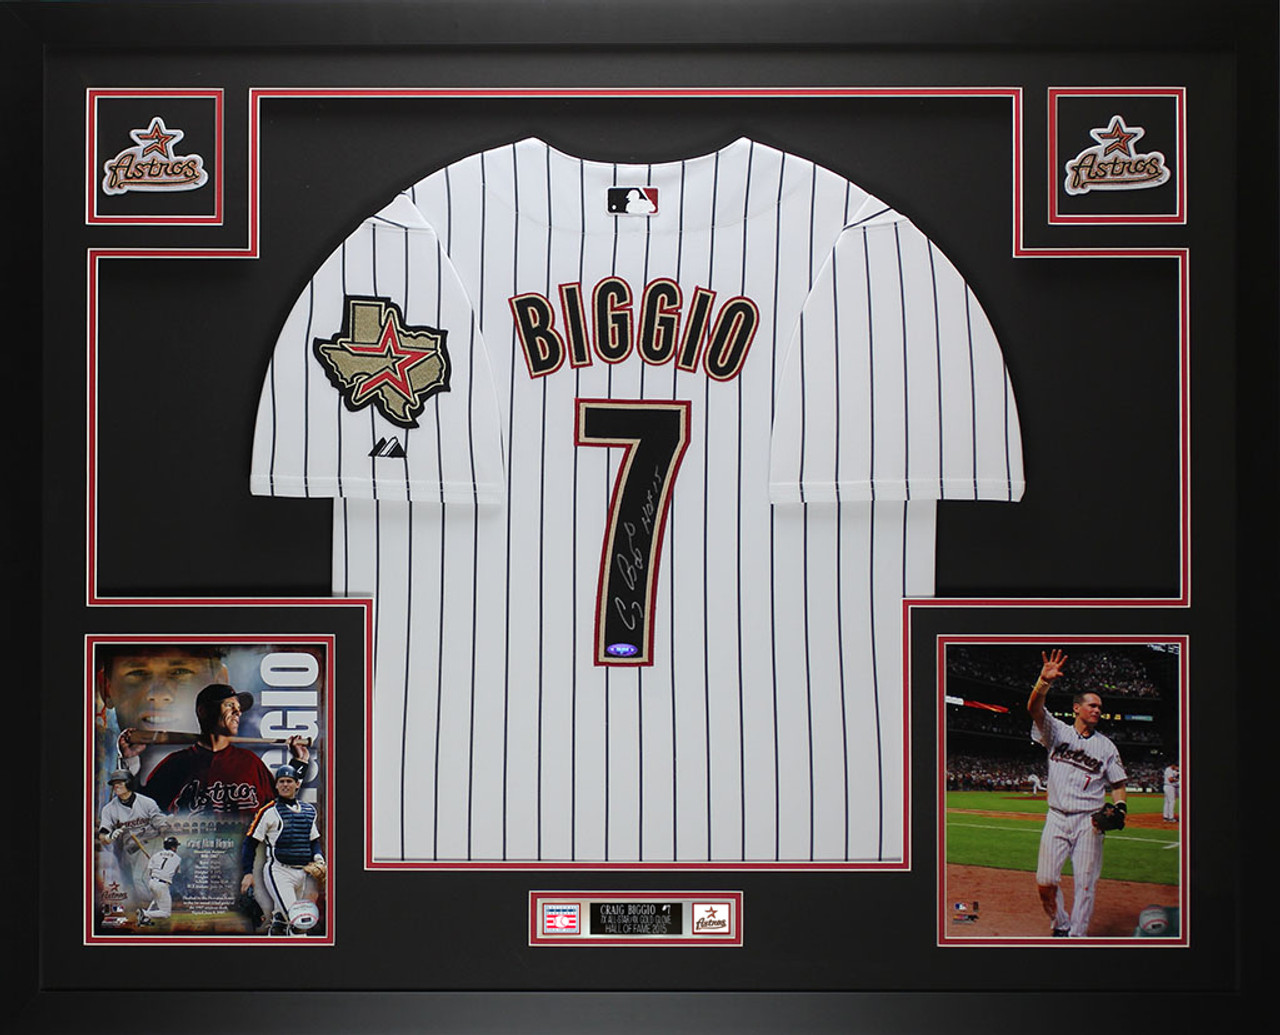 Craig Biggio Autographed HOF 15 & Framed Pinstriped Astros Jersey